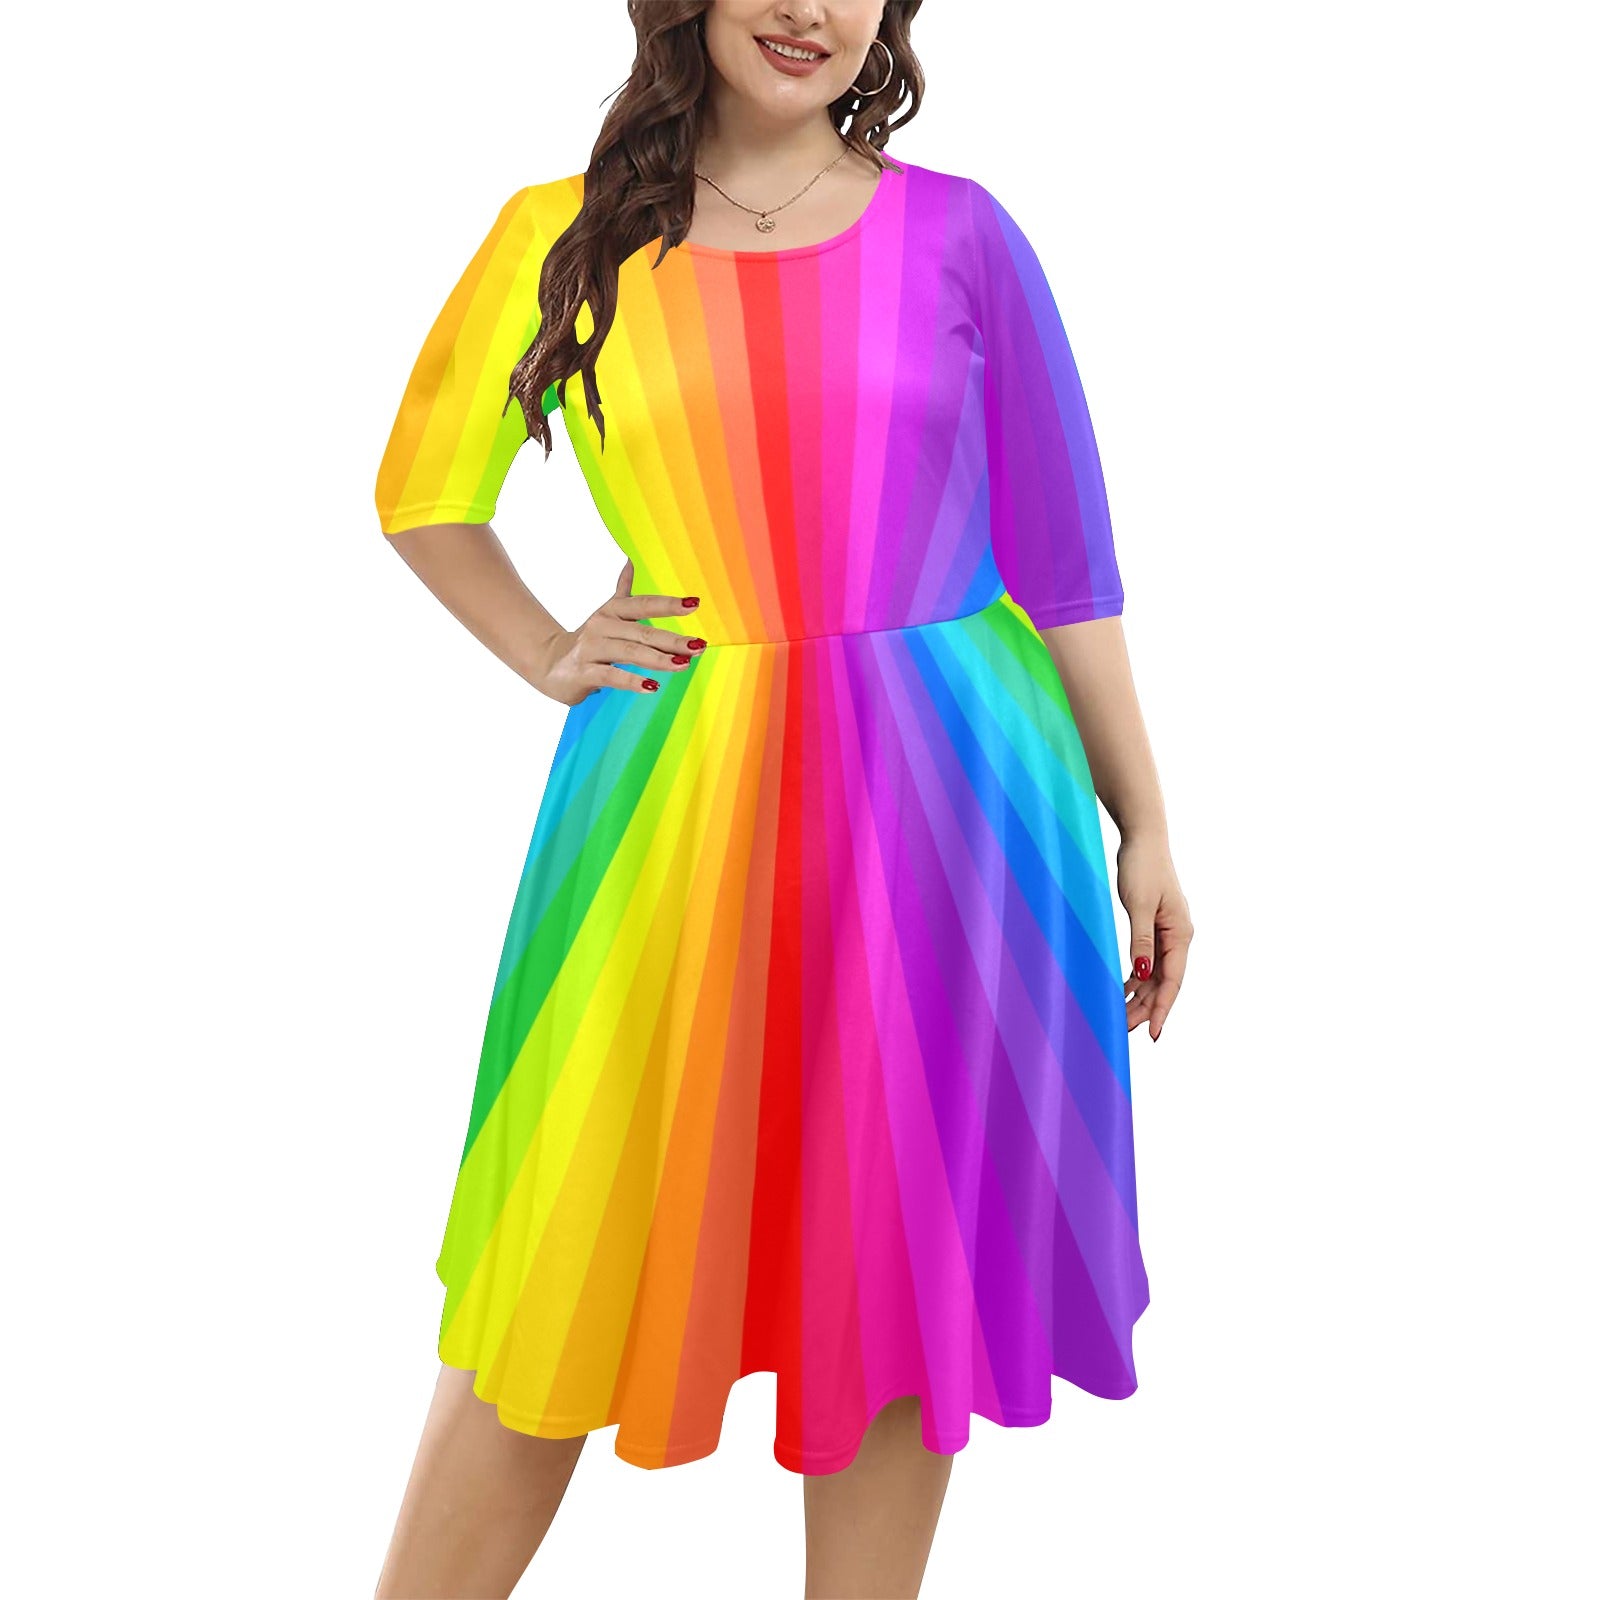 Rainbow Dress With sleeves